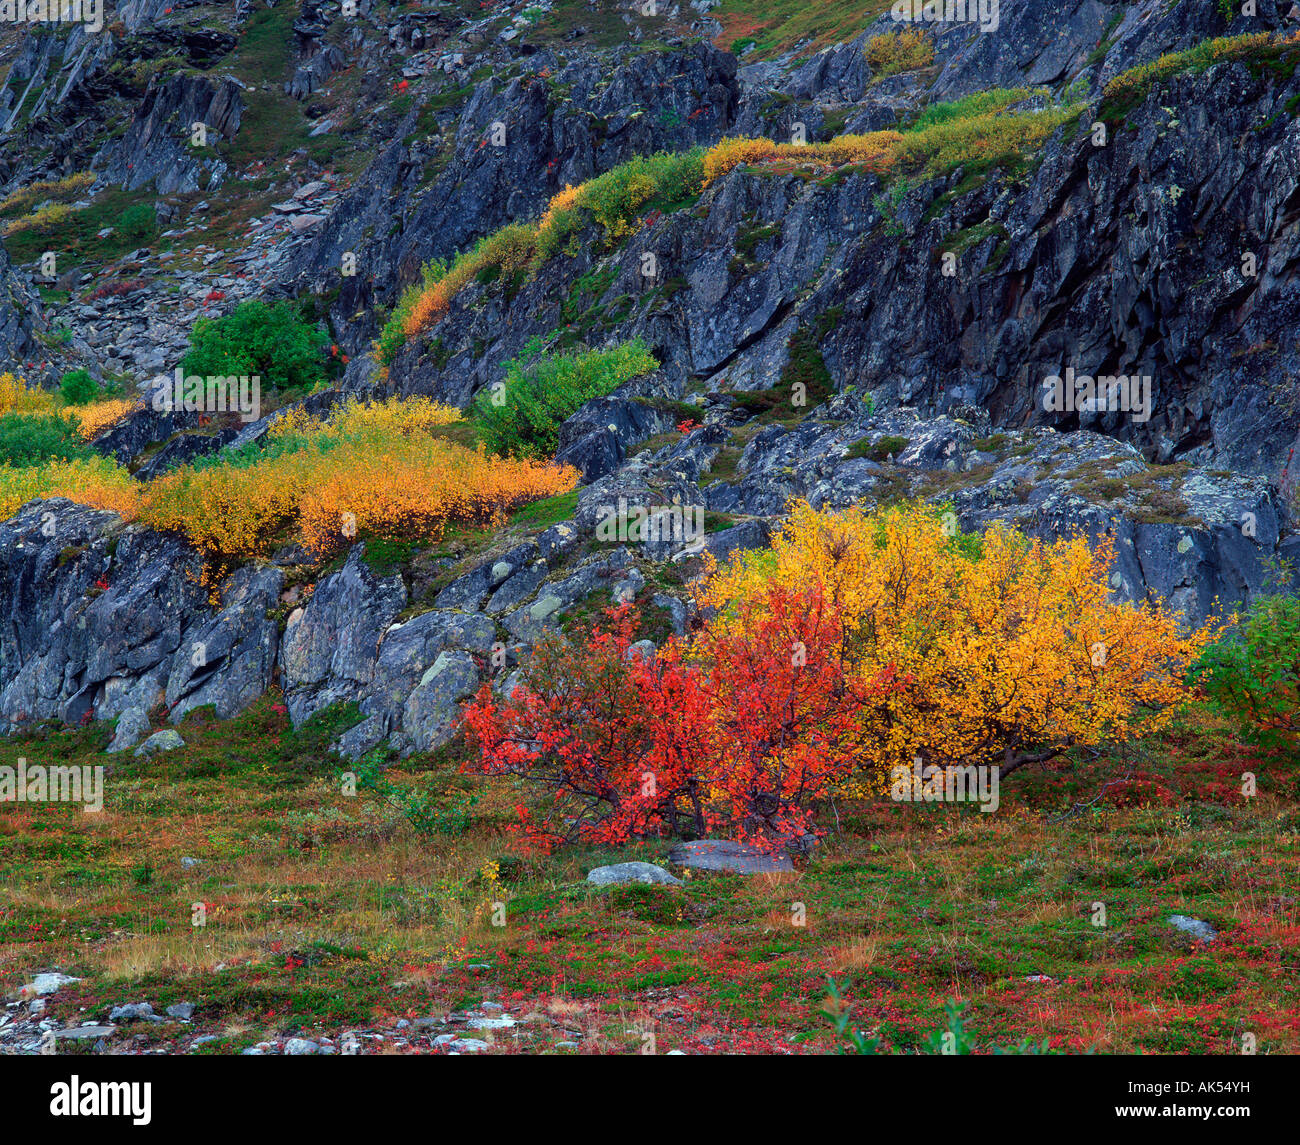 Birch in autumn Stock Photo